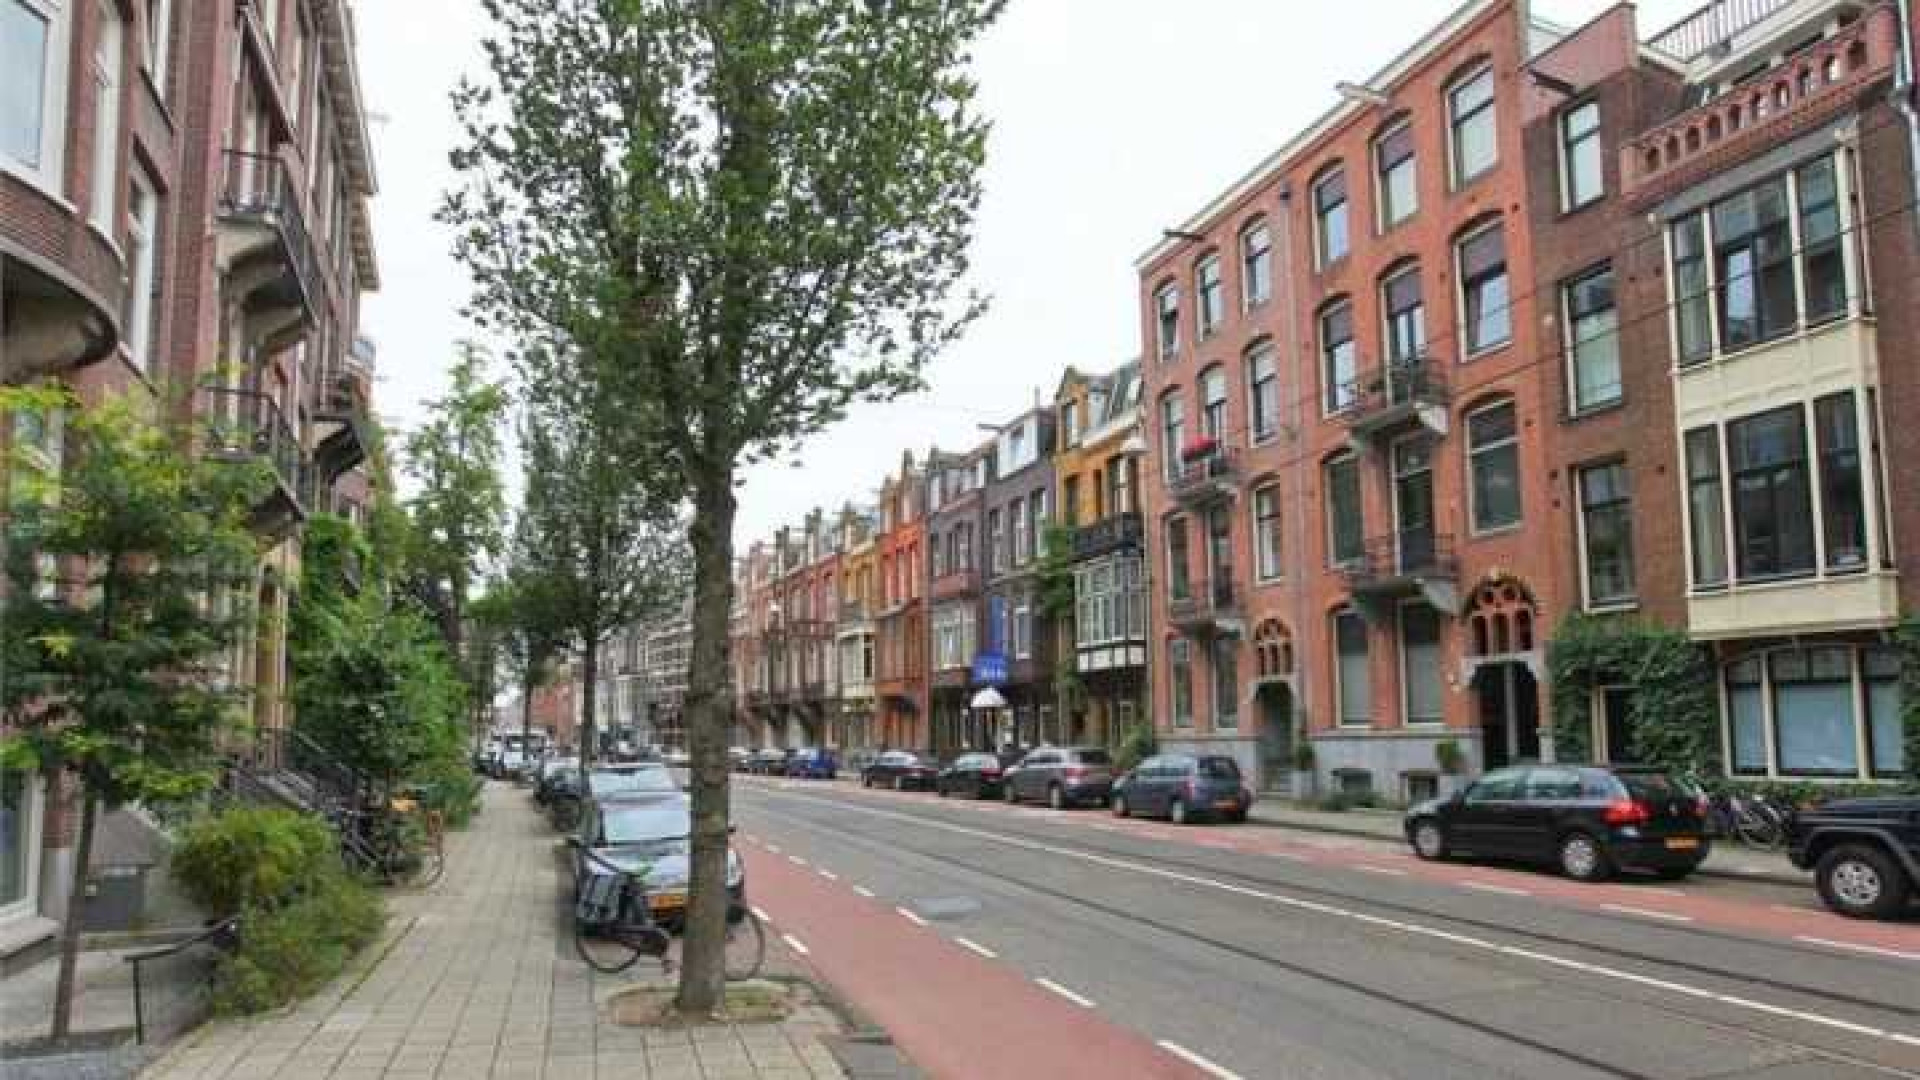 Caro Emerald koopt statig pand in Amsterdam Zuid. Zie foto's